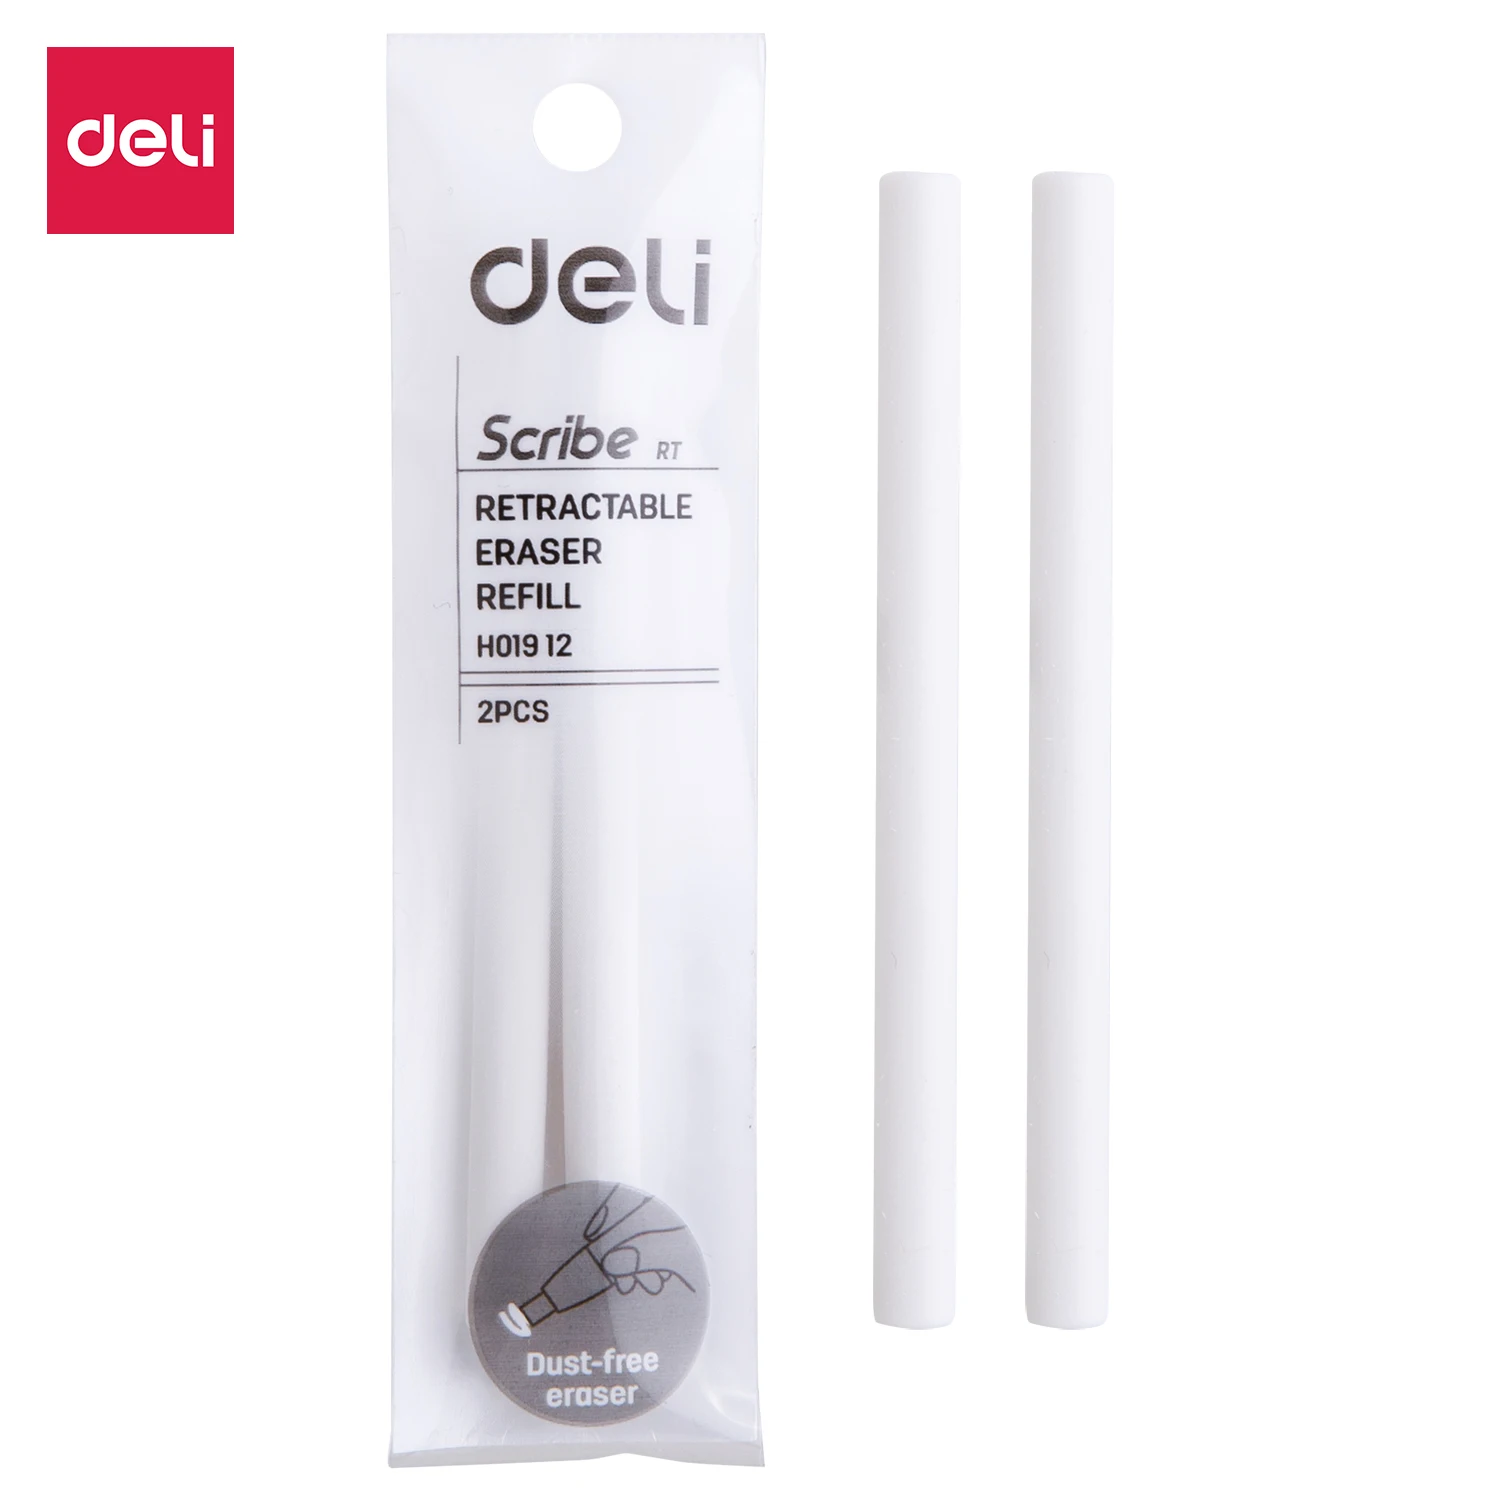 Deli Press Retractable Pencil Eraser Correction Supplies Pencil Rubber Writing School Student Supplies Stationery images - 6